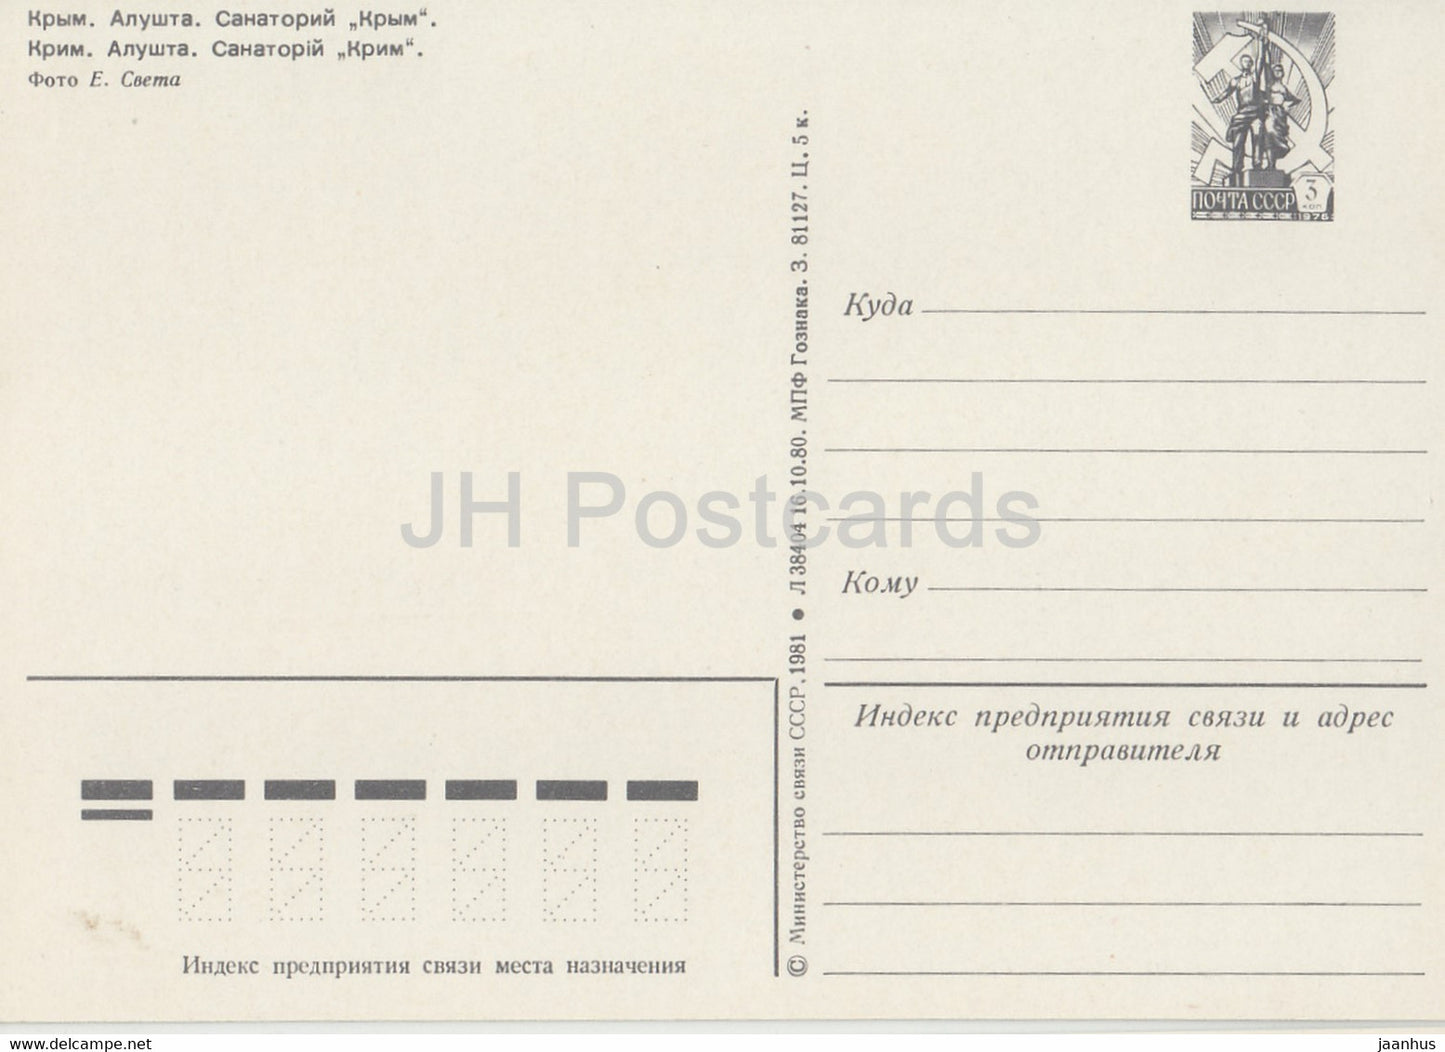 Crimea - Alushta - sanatorium Crimea - postal stationery - 1981 - Ukraine USSR - unused